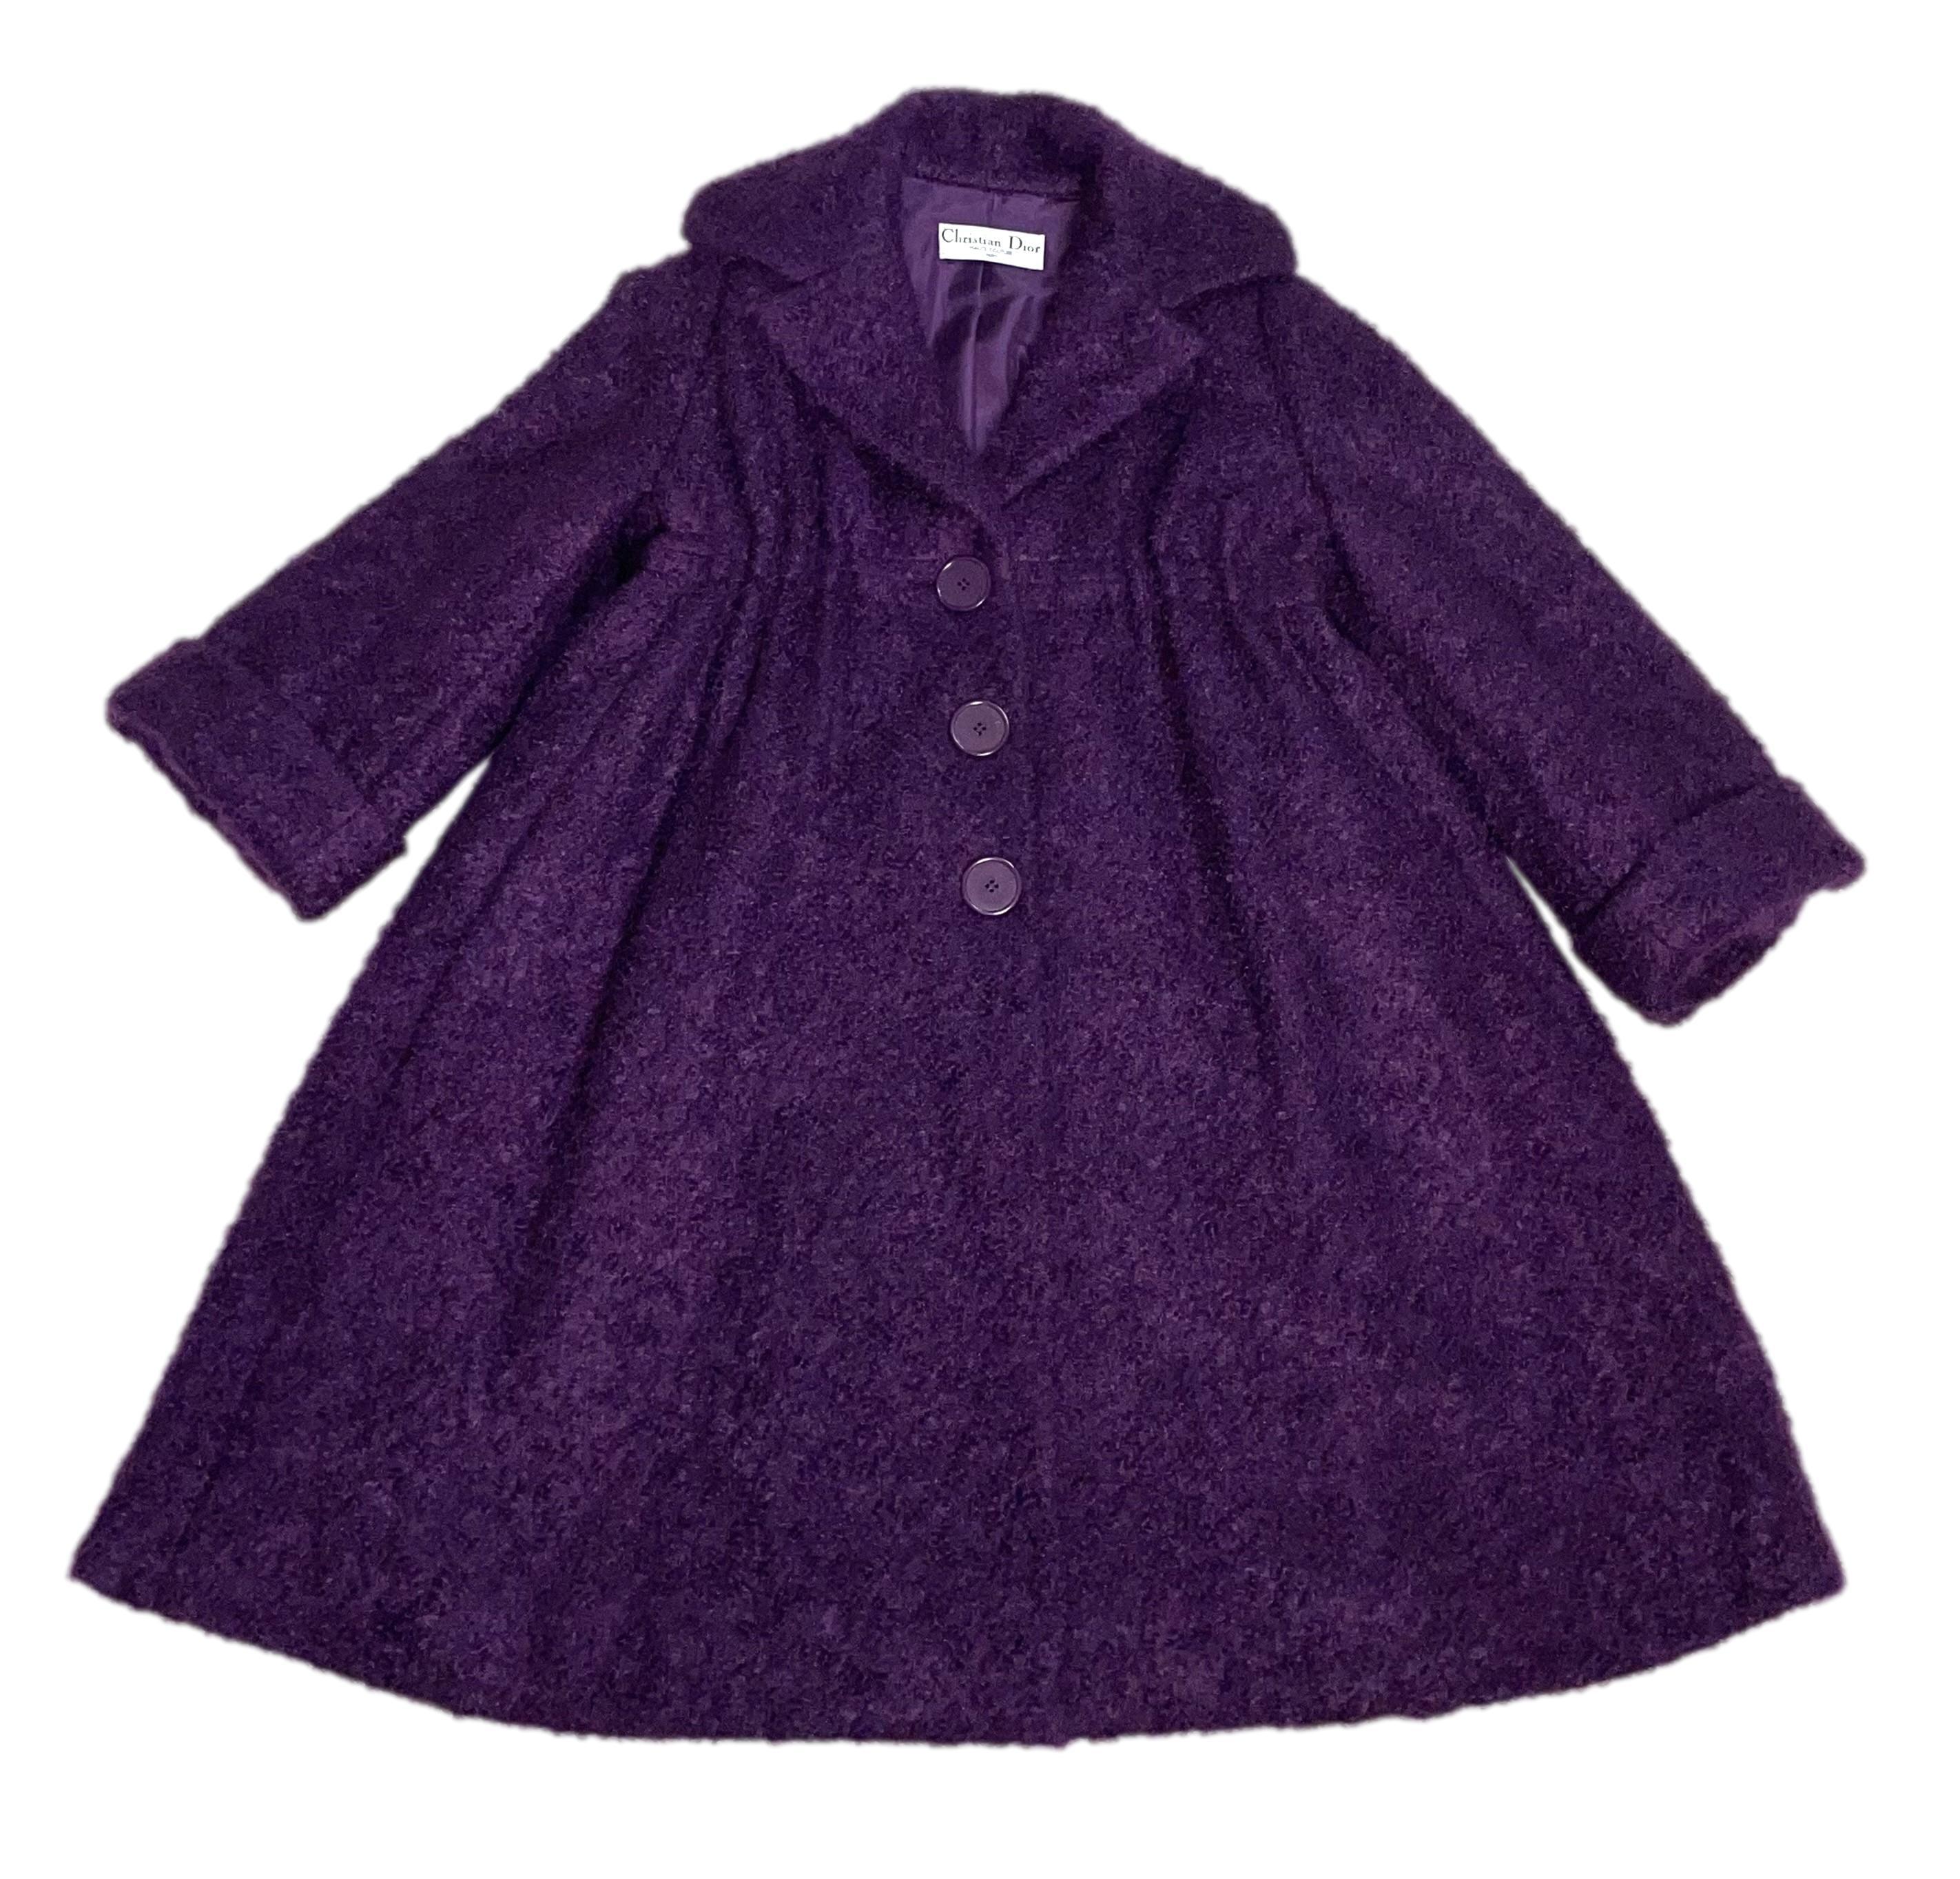 Women's F/W 2009 Christian Dior by John Galliano Haute Couture 1960's Style Purple Coat For Sale